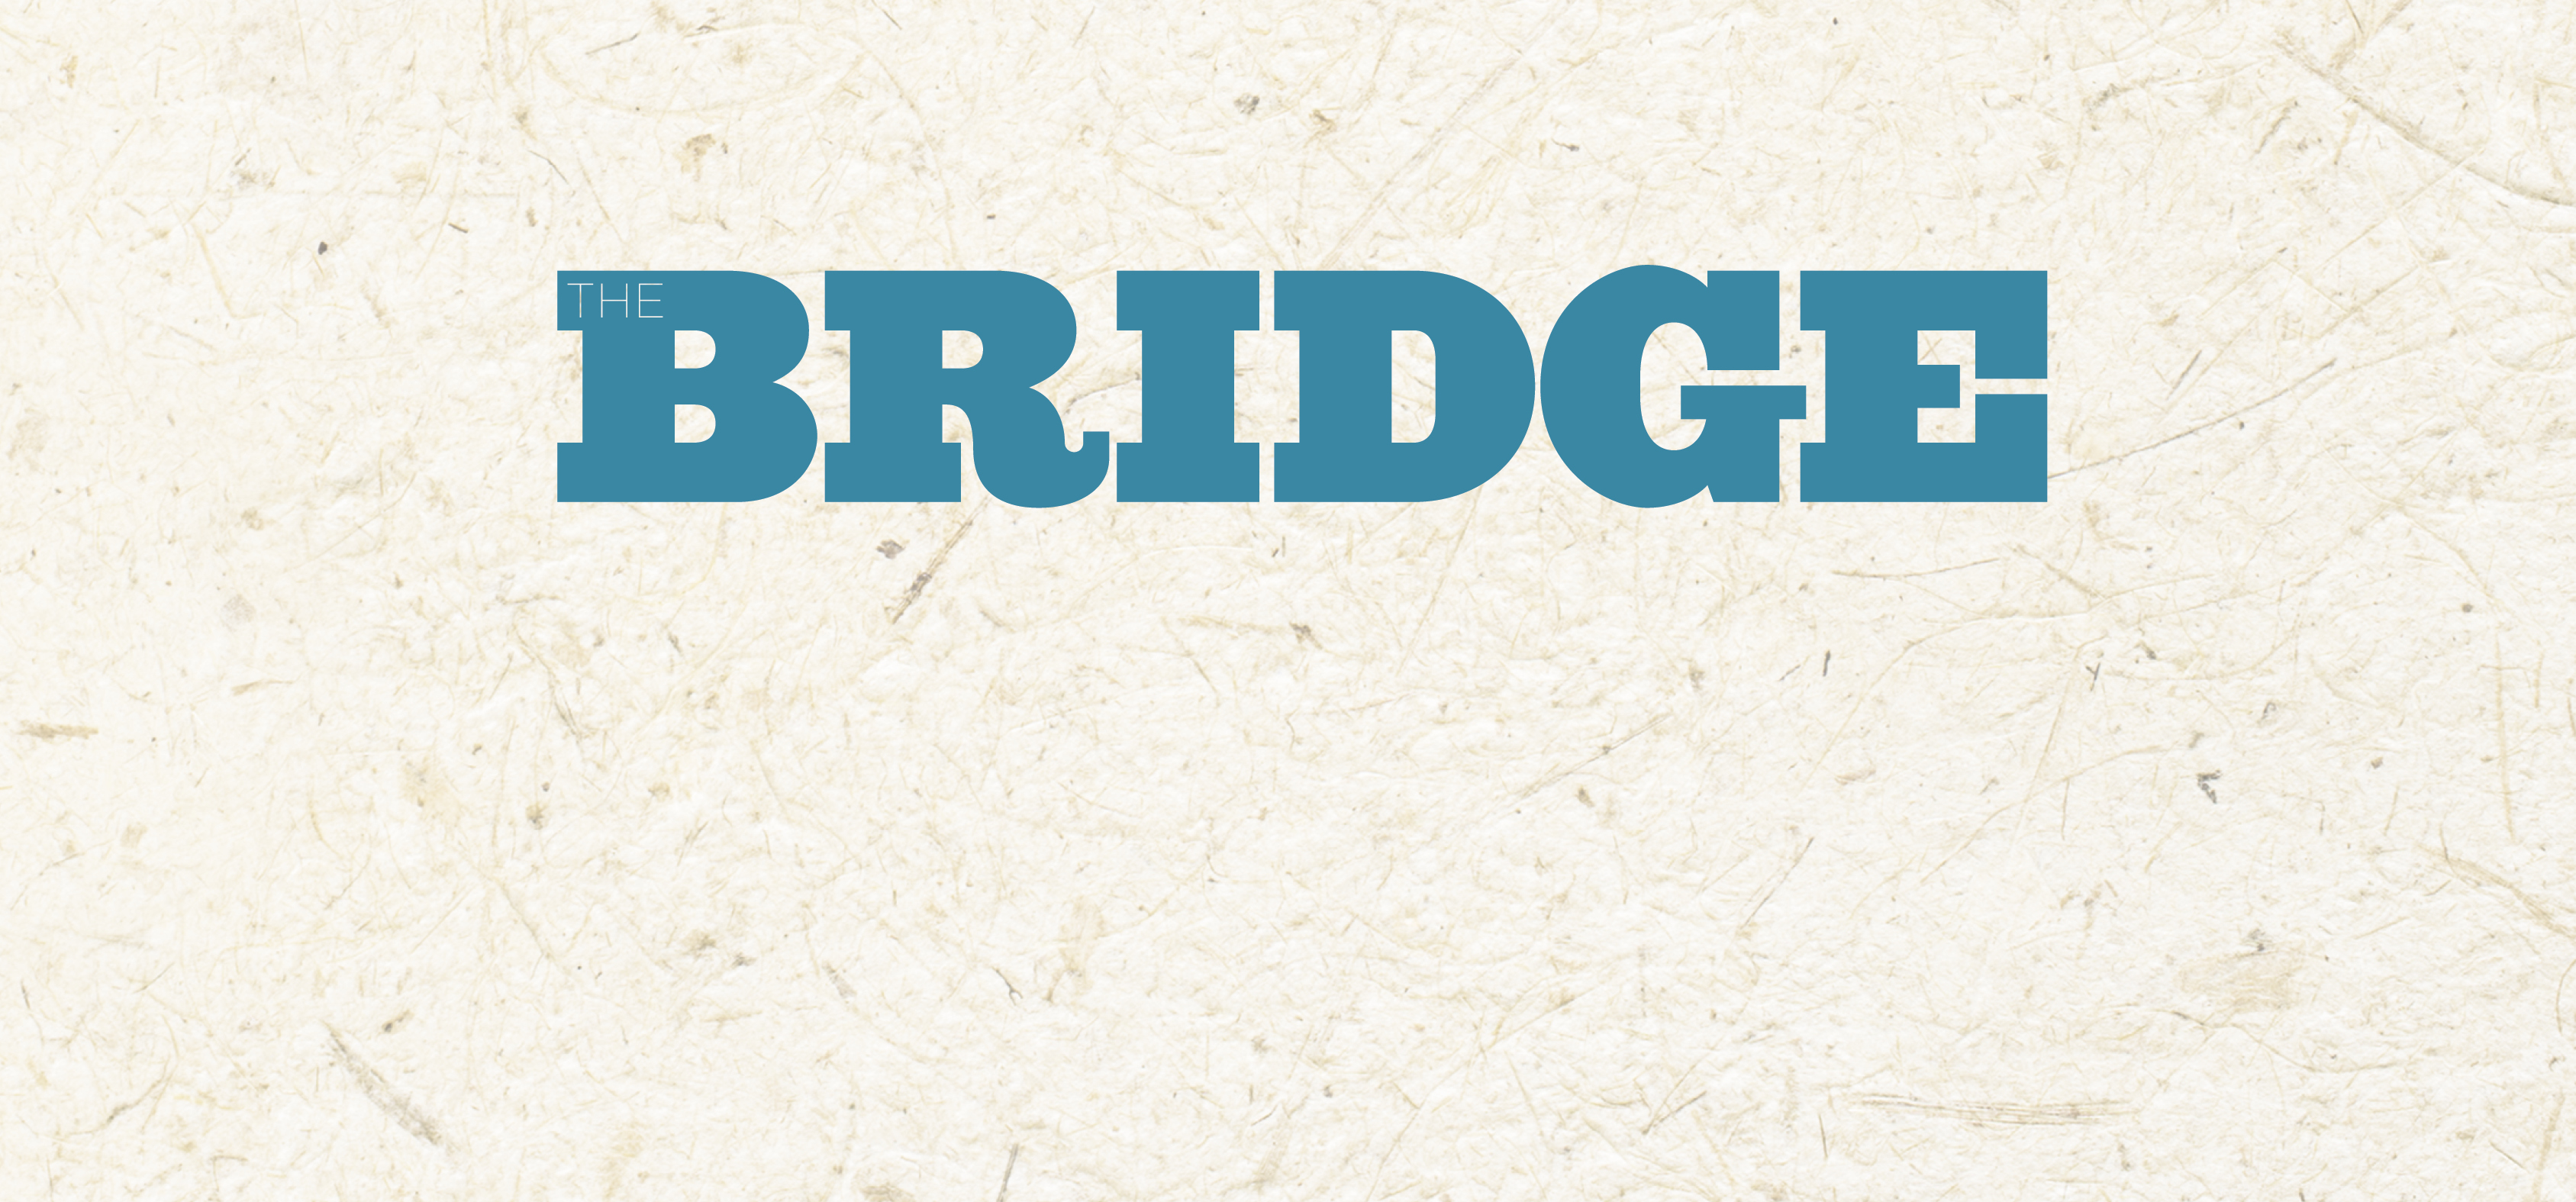 Volume I, 2021 Bridge webheader Vol12021.jpg